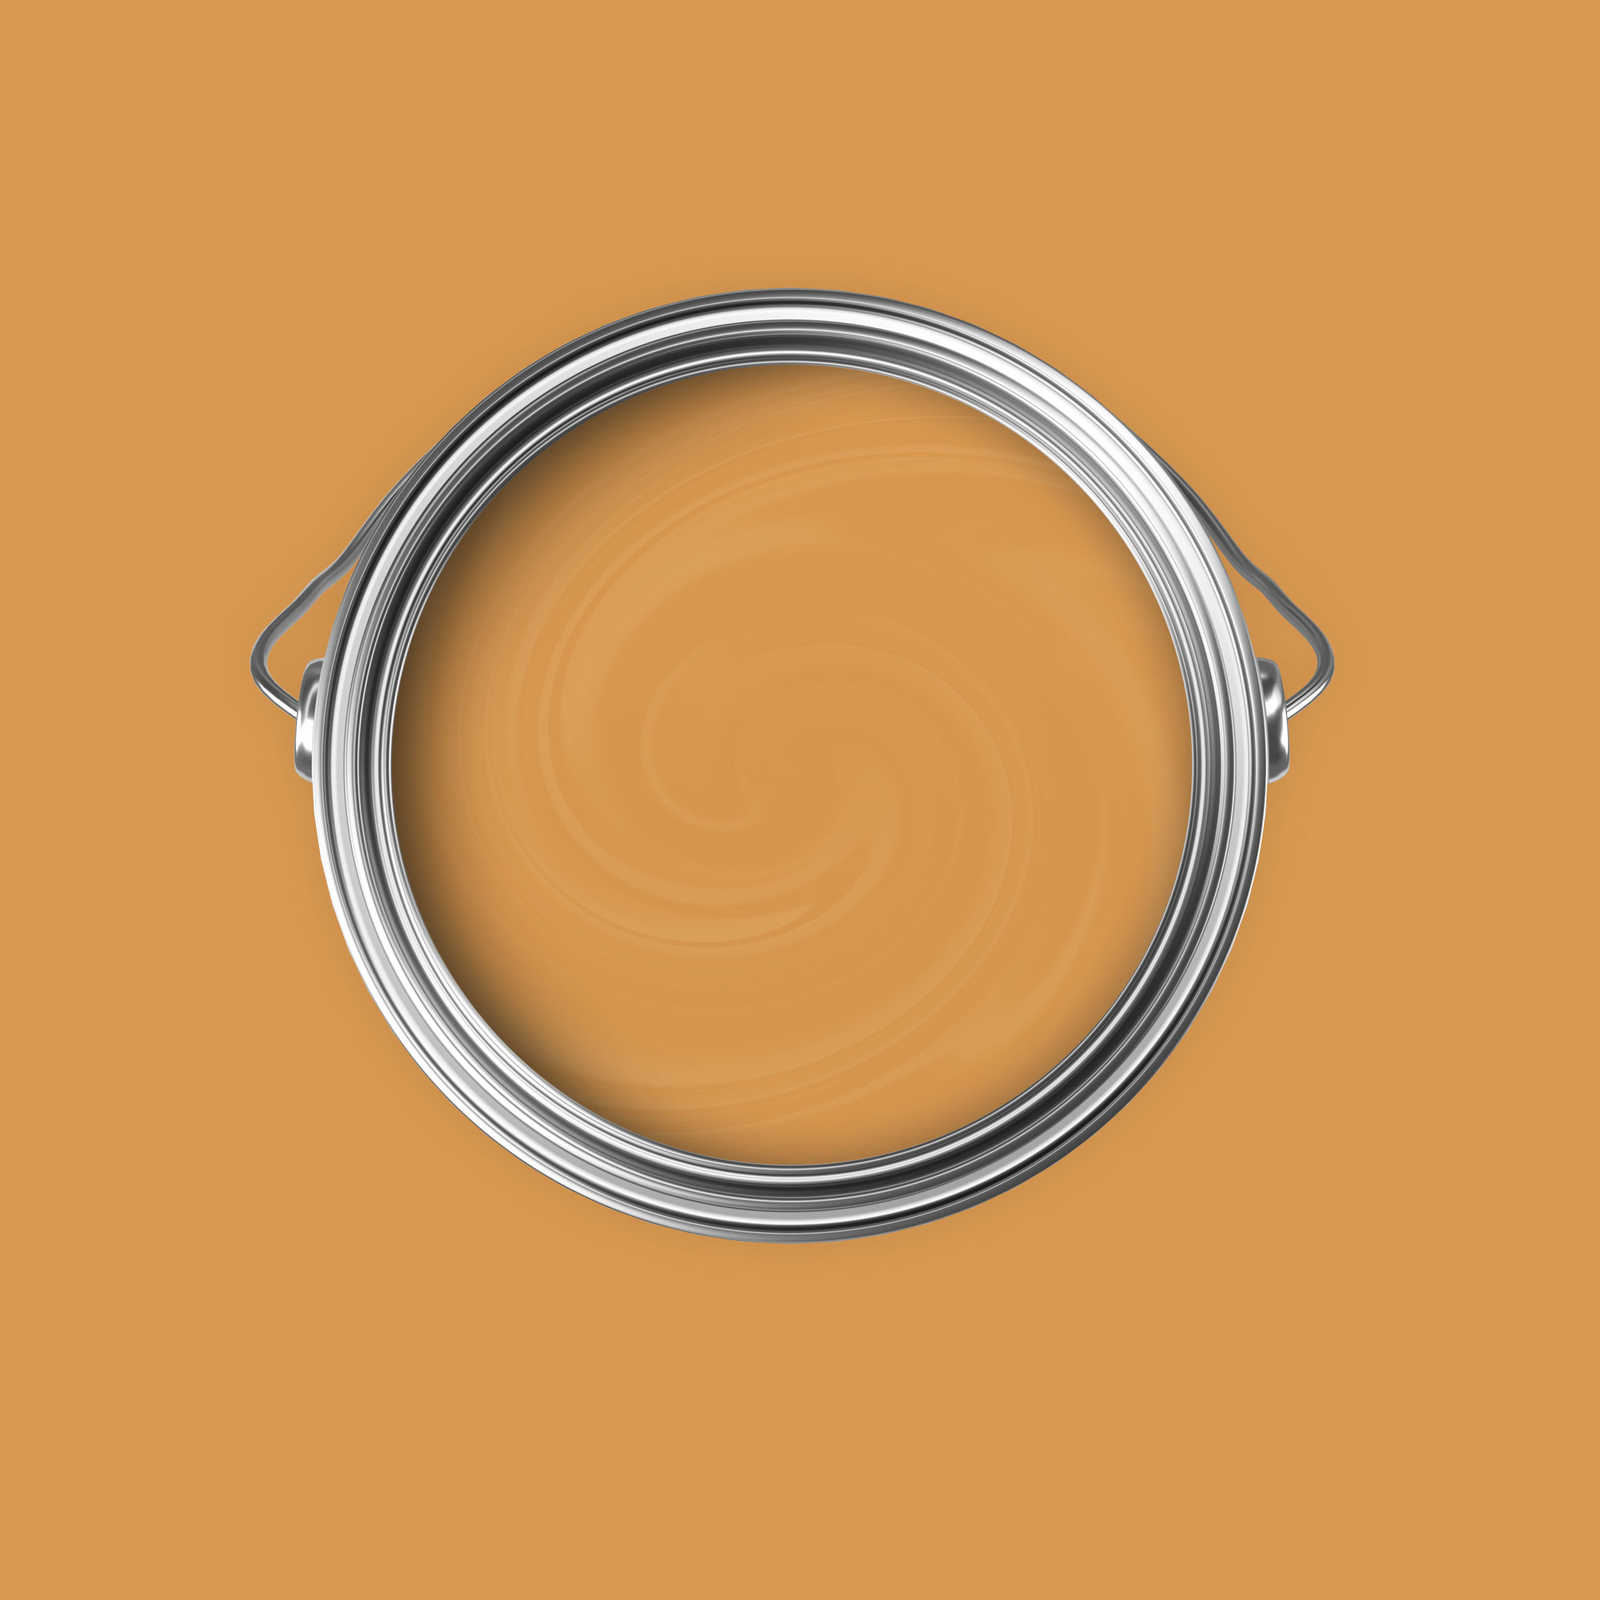             Pittura murale Premium Arancione caldo »Beige Orange/Sassy Saffron« NW813 – 5 litri
        